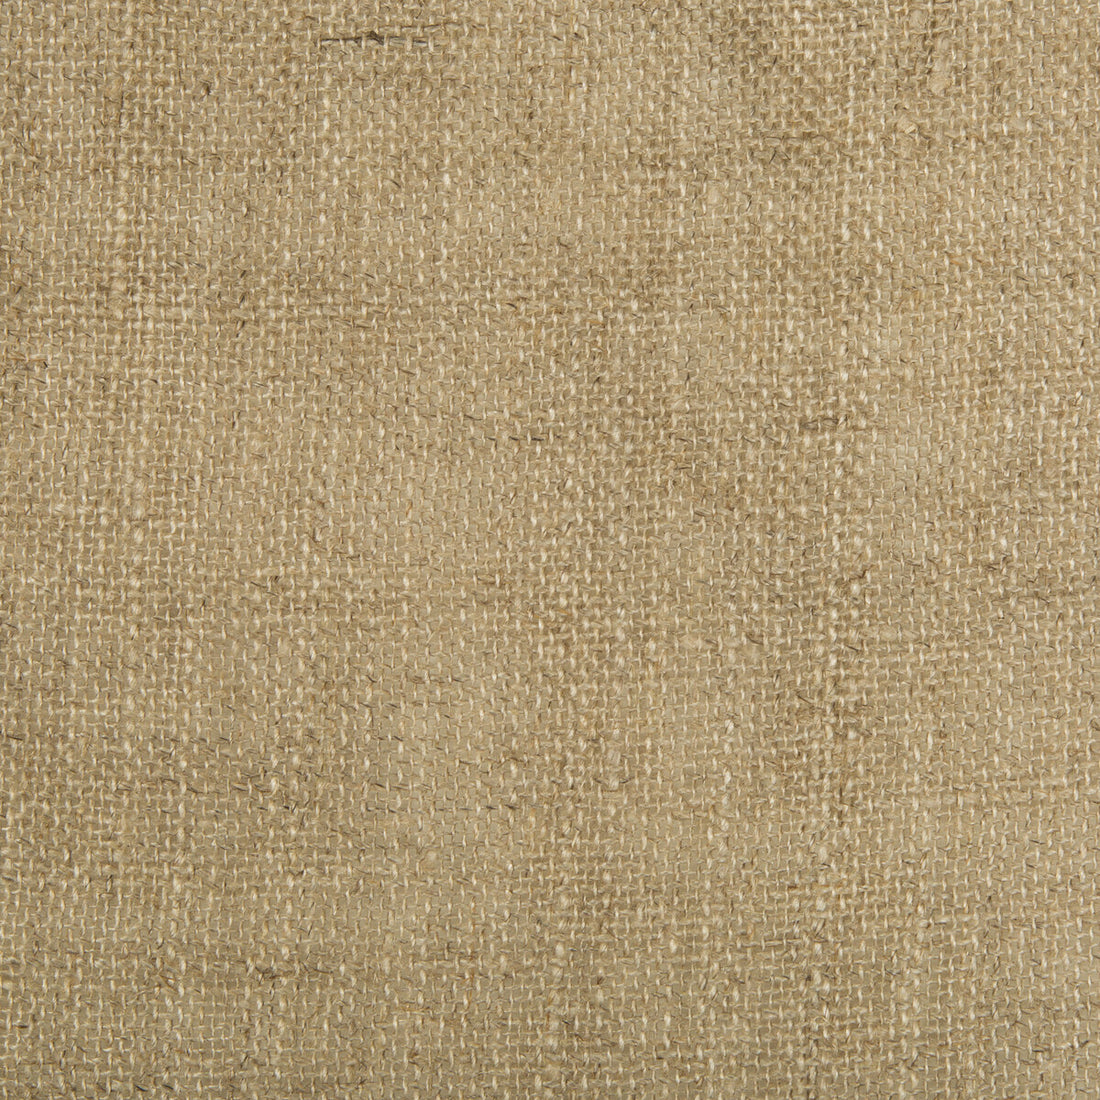 Lynette fabric in burlap color - pattern 8014135.106.0 - by Brunschwig &amp; Fils